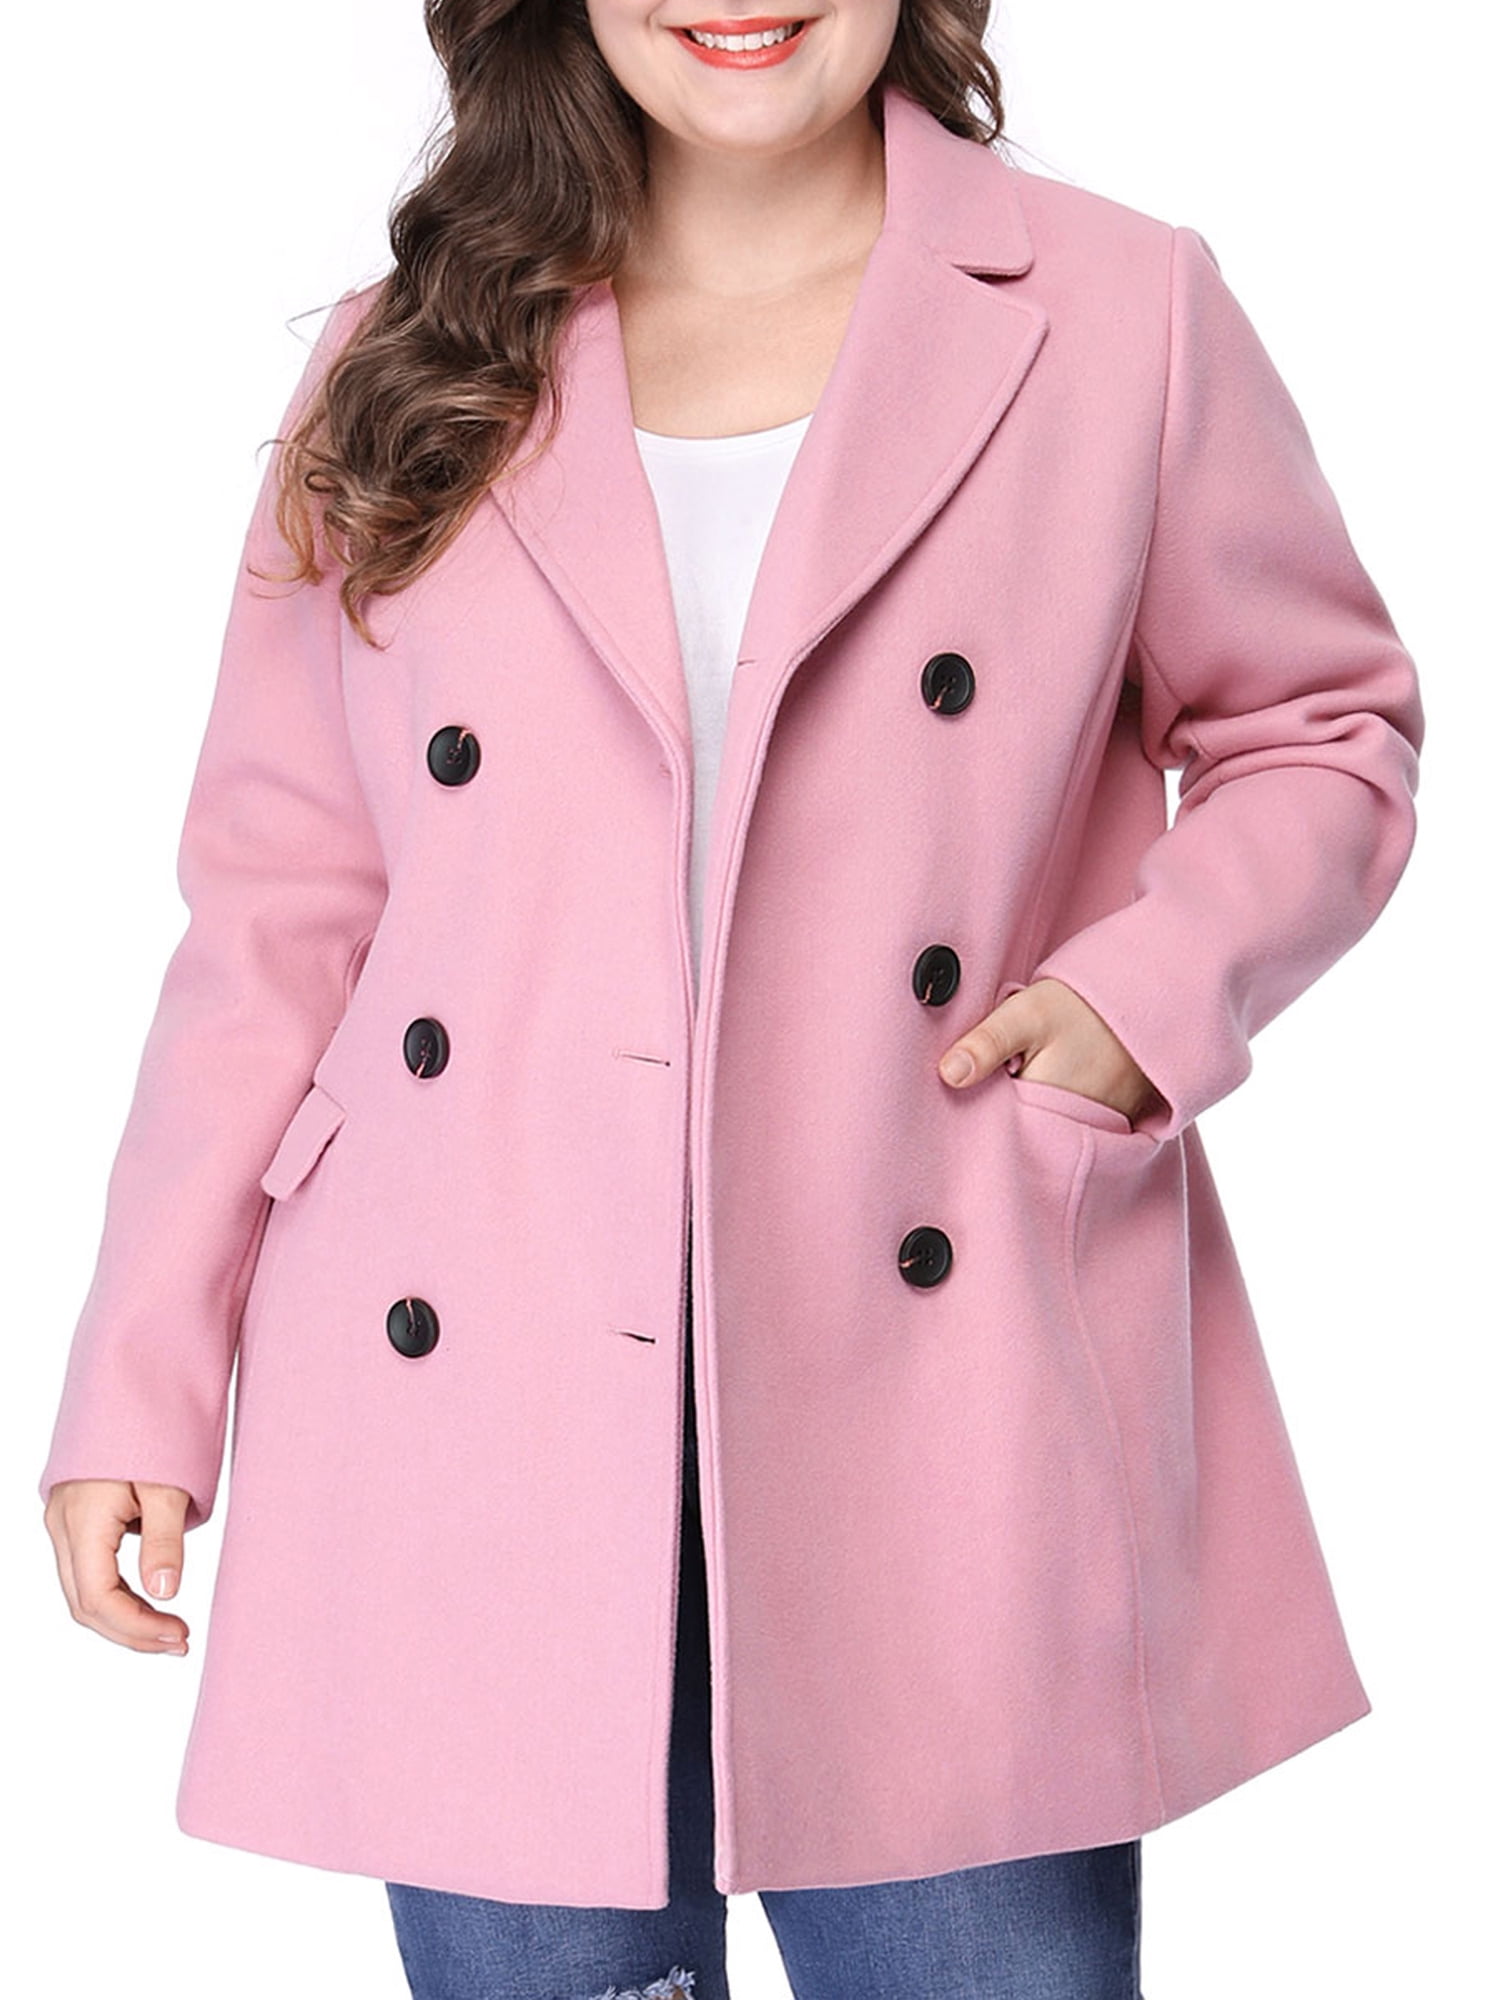 Short Double Breasted Coat for Women Winter Warm Fleece Velvet Floral Jacket